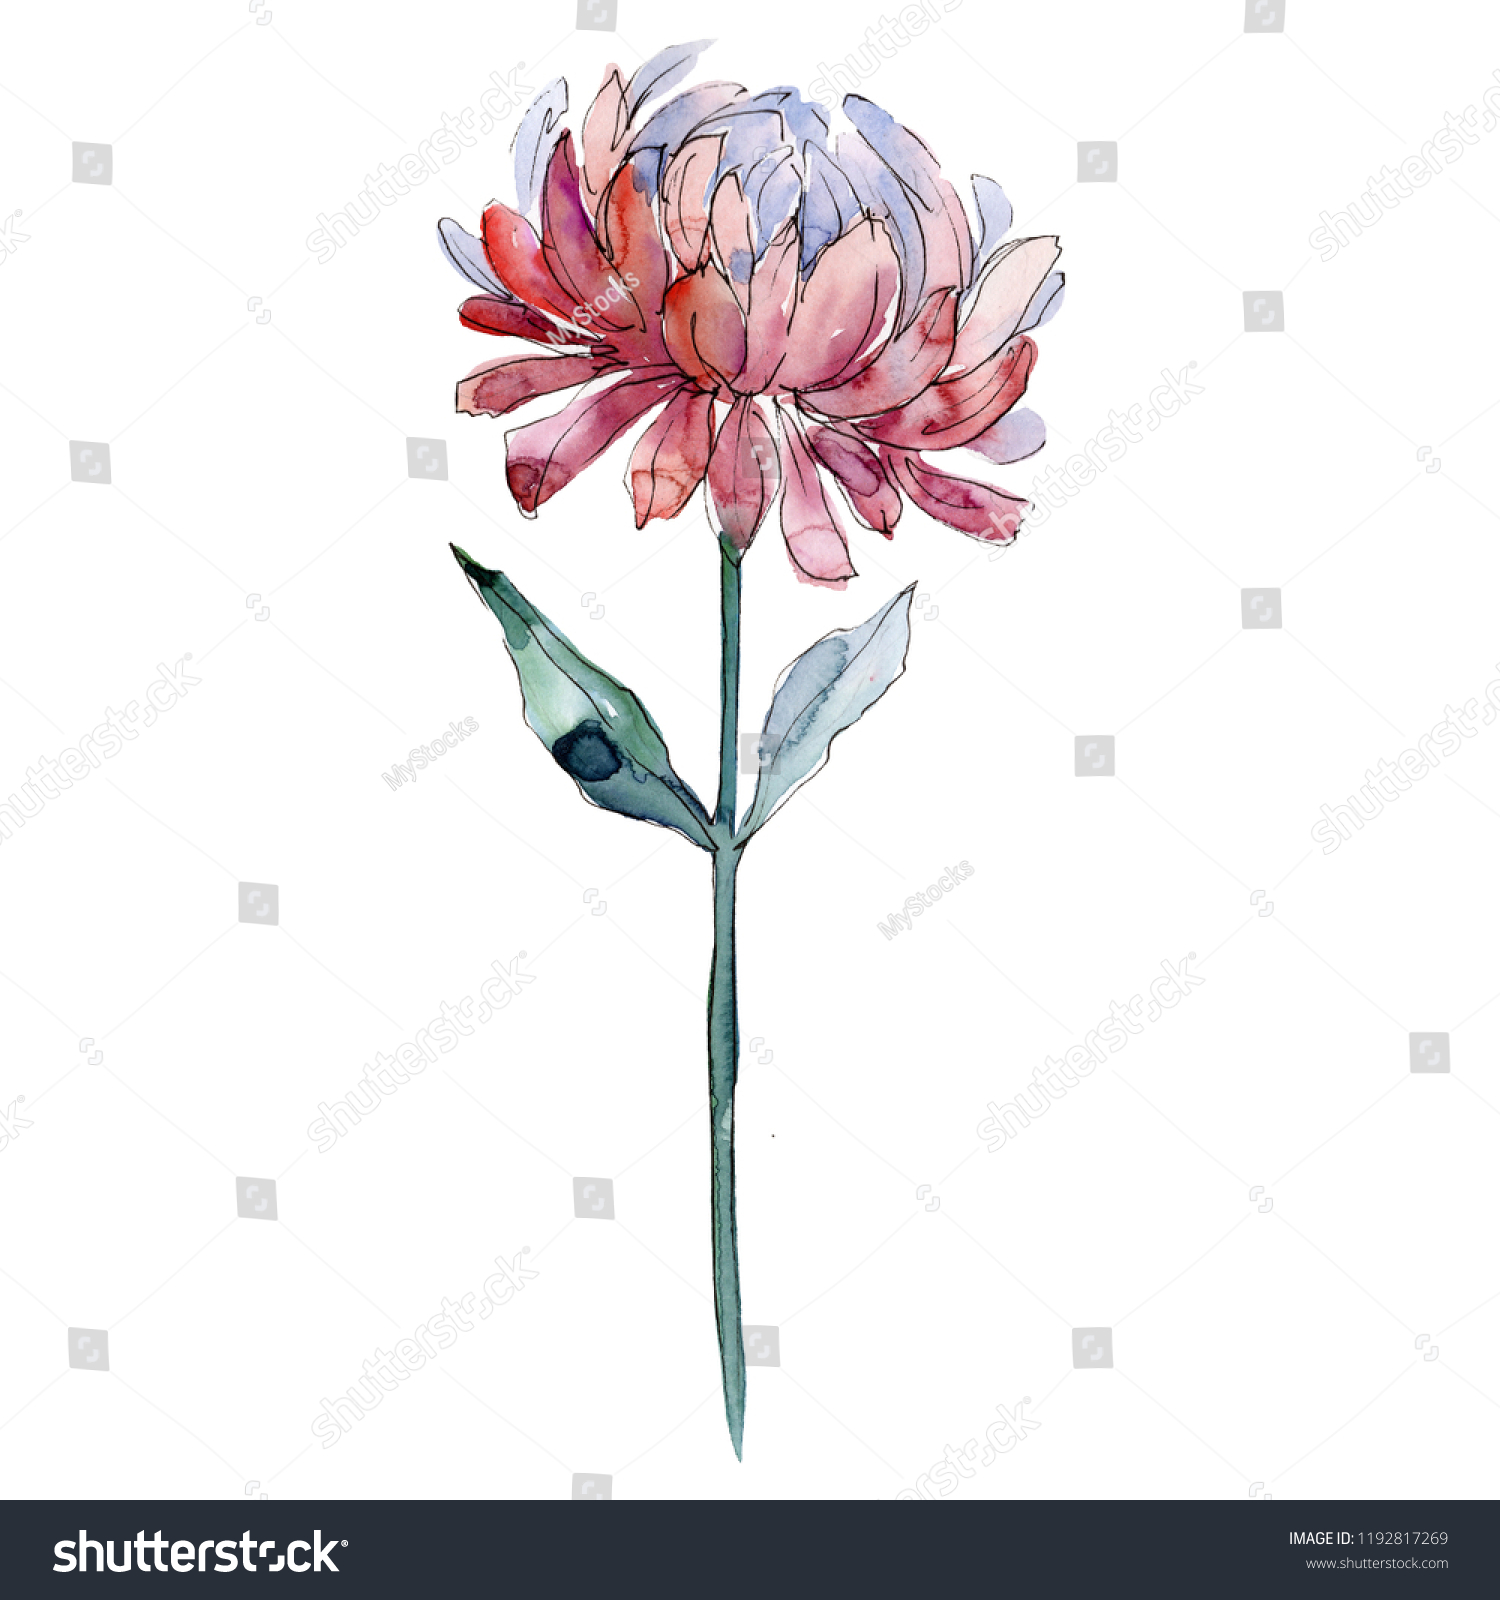 Watercolor Red Aster Flower Floral Botanical Stock Illustration 1192817269